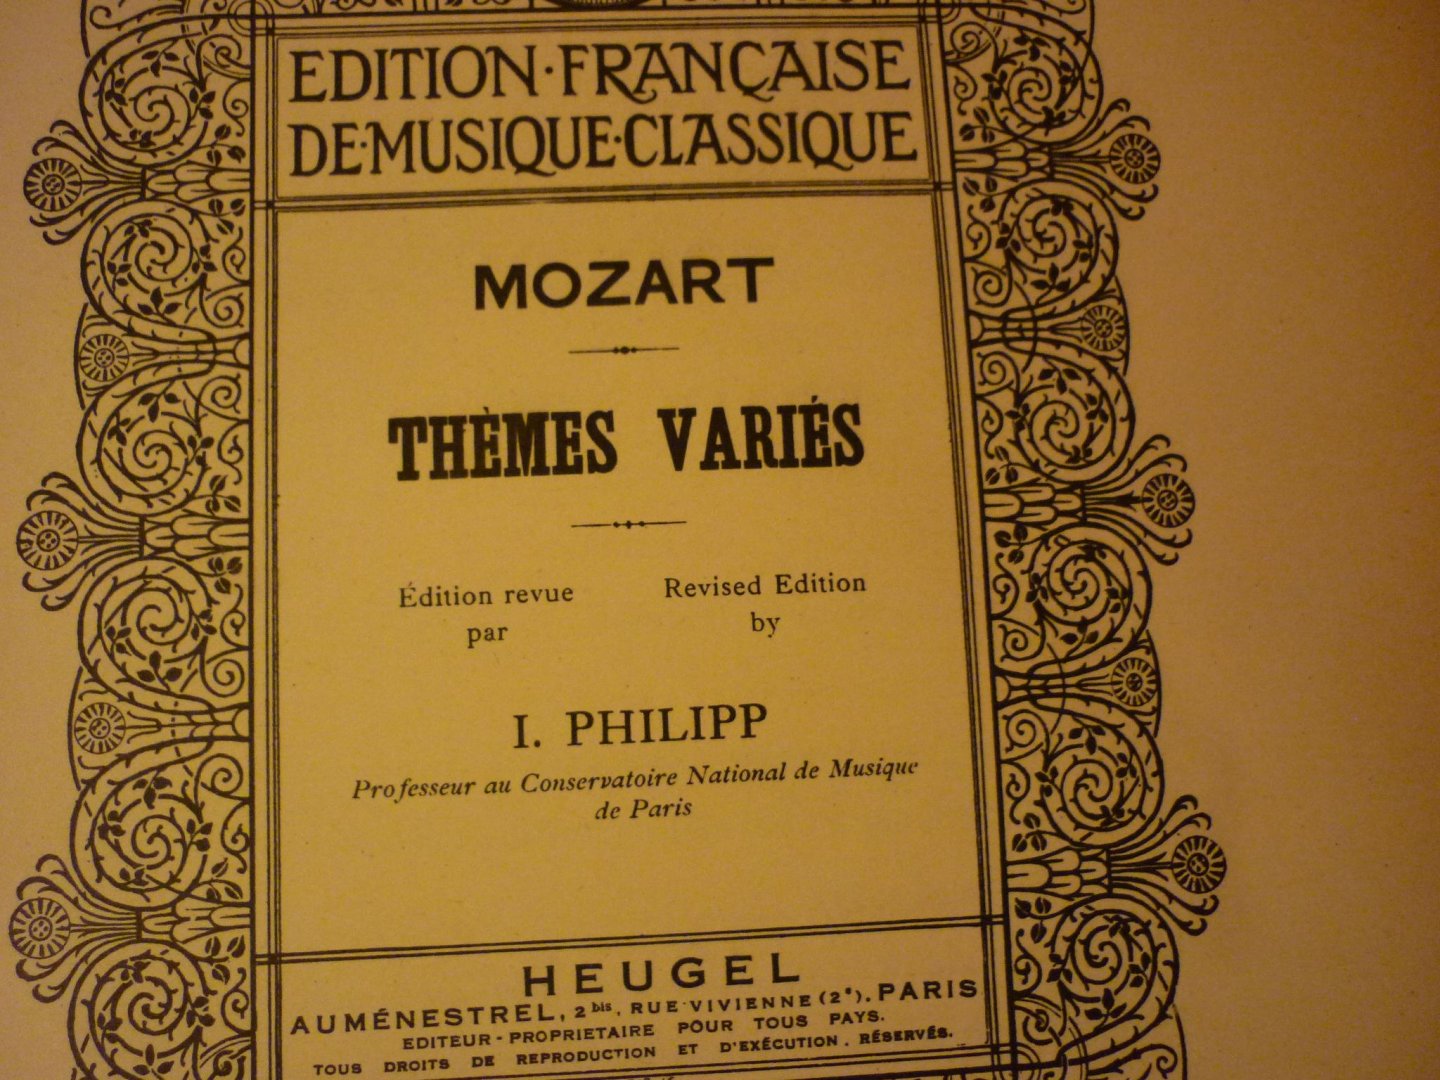 Mozart. W.A. (1756 – 1791) - Themes varies; Edition Francaise; De Musique-Classique (Revised edition by I. Philipp)